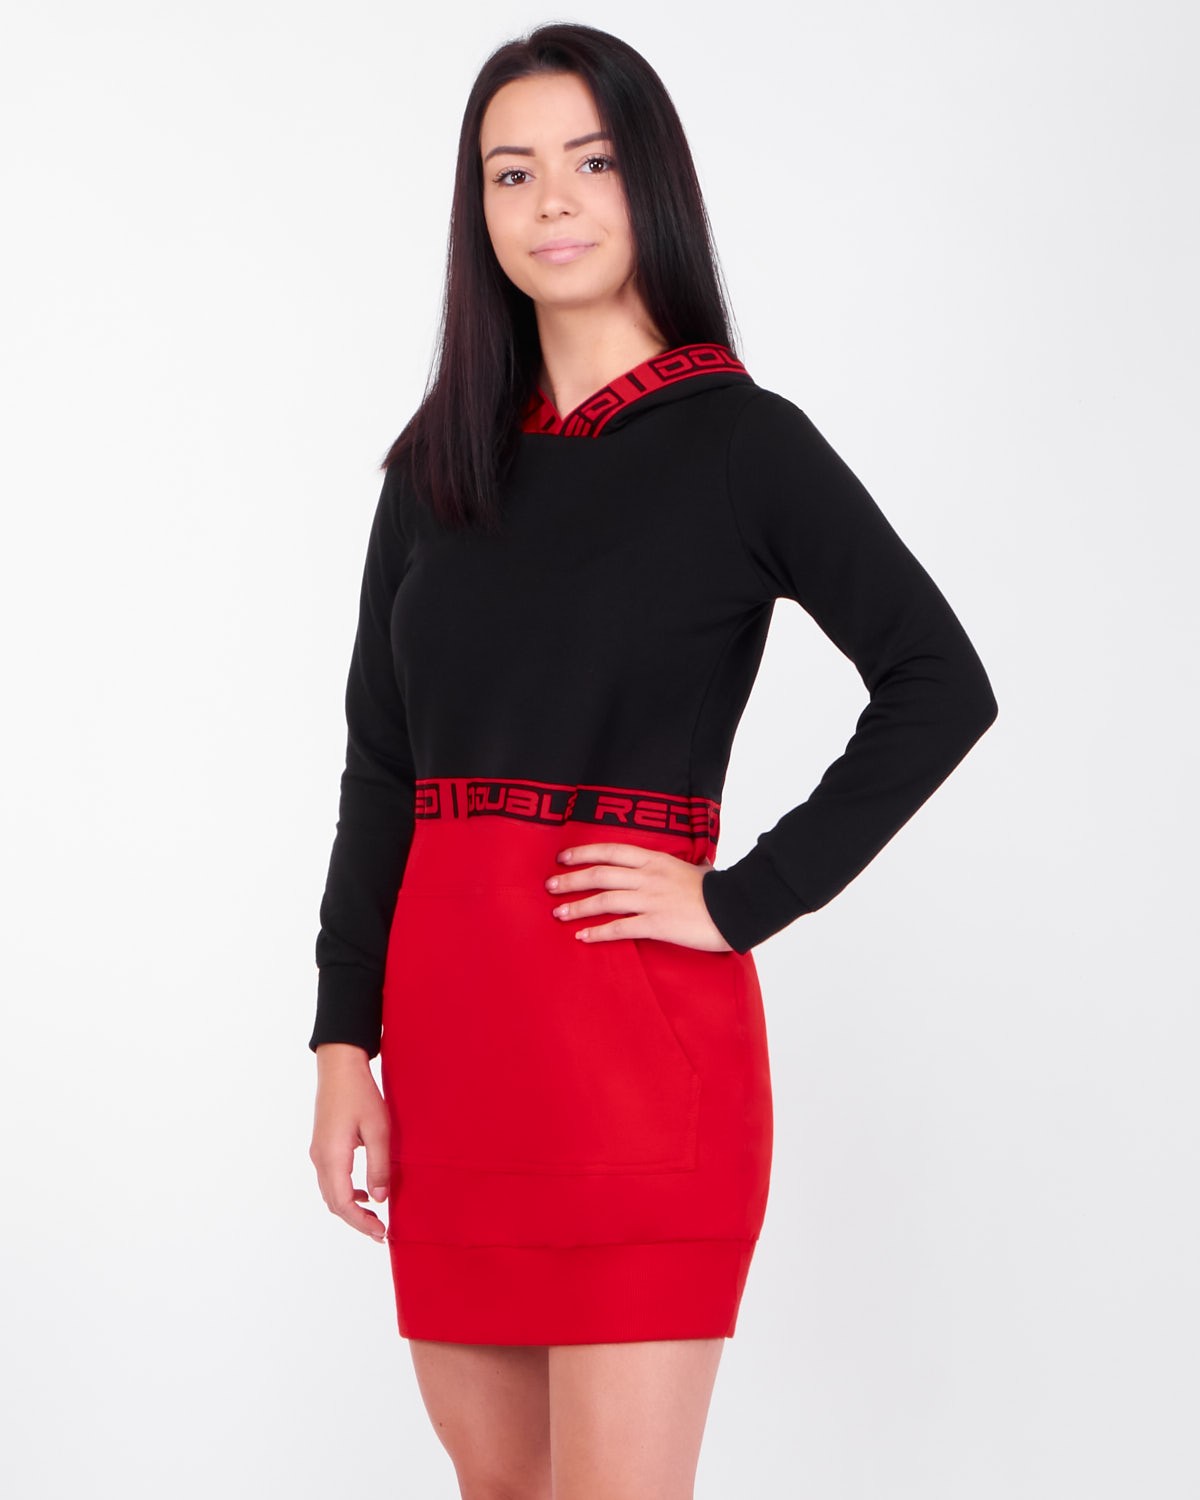 EMINENCE Black RED DRESS